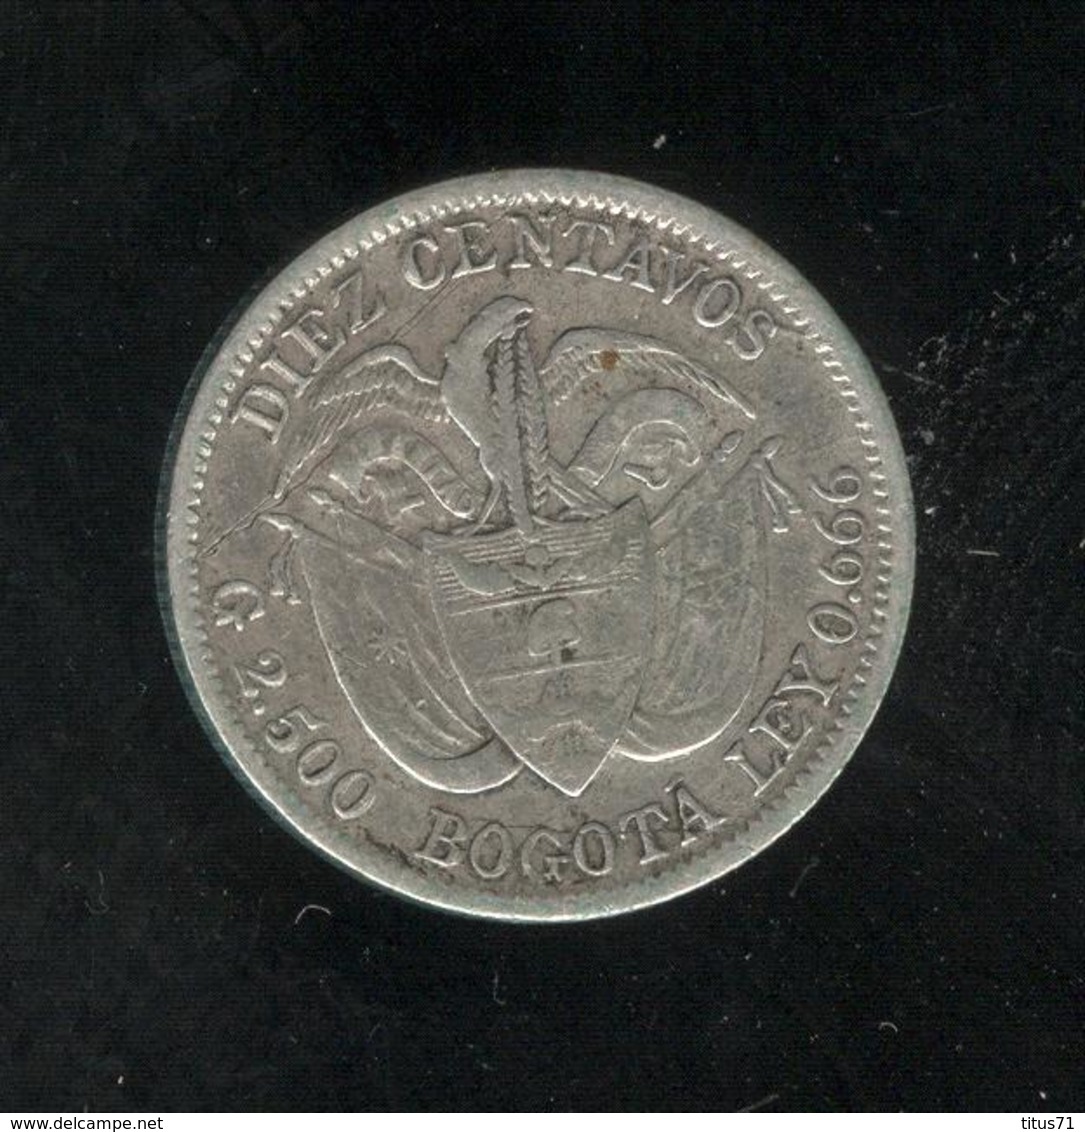 10 Centavos / Diez Centavos Colombie / Colombia 1897 - Colombie